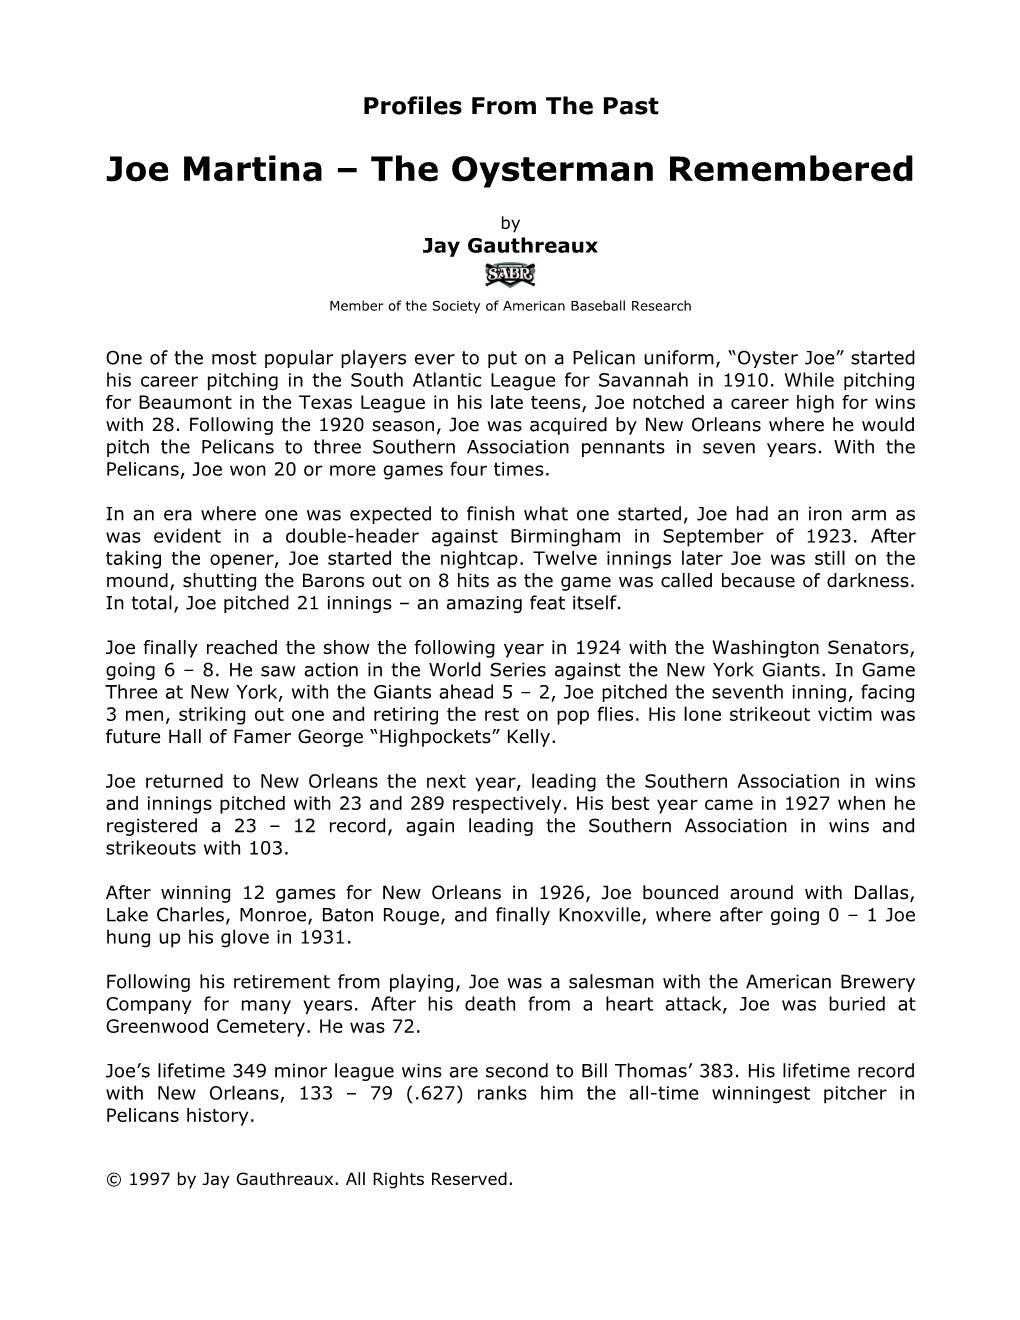 Joe Martina – the Oysterman Remembered